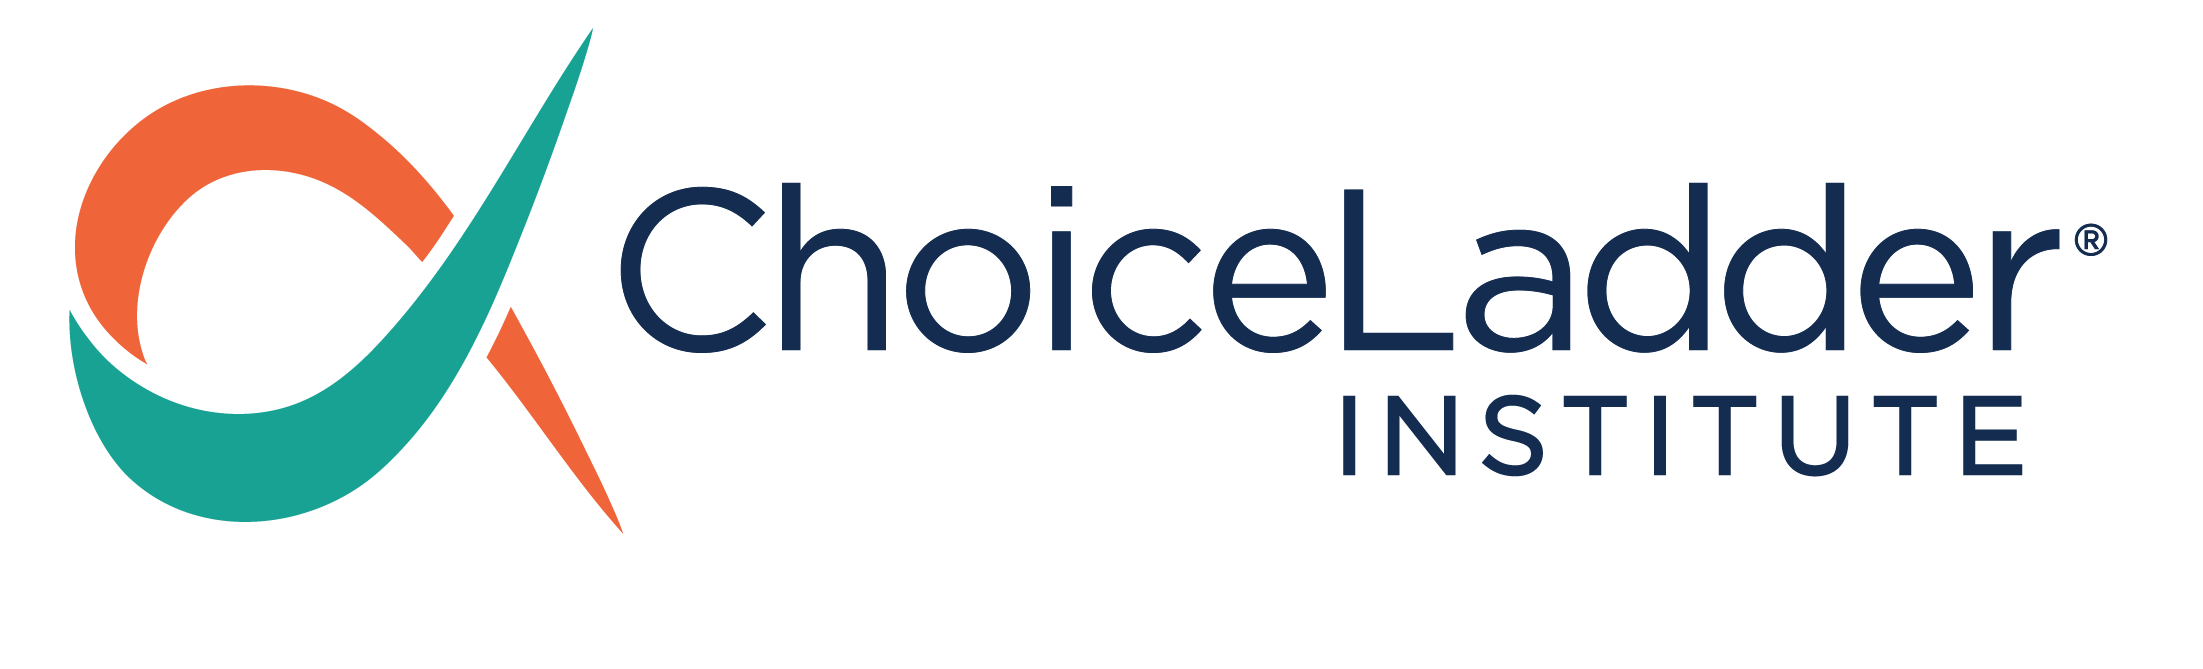 The ChoiceLadder logo